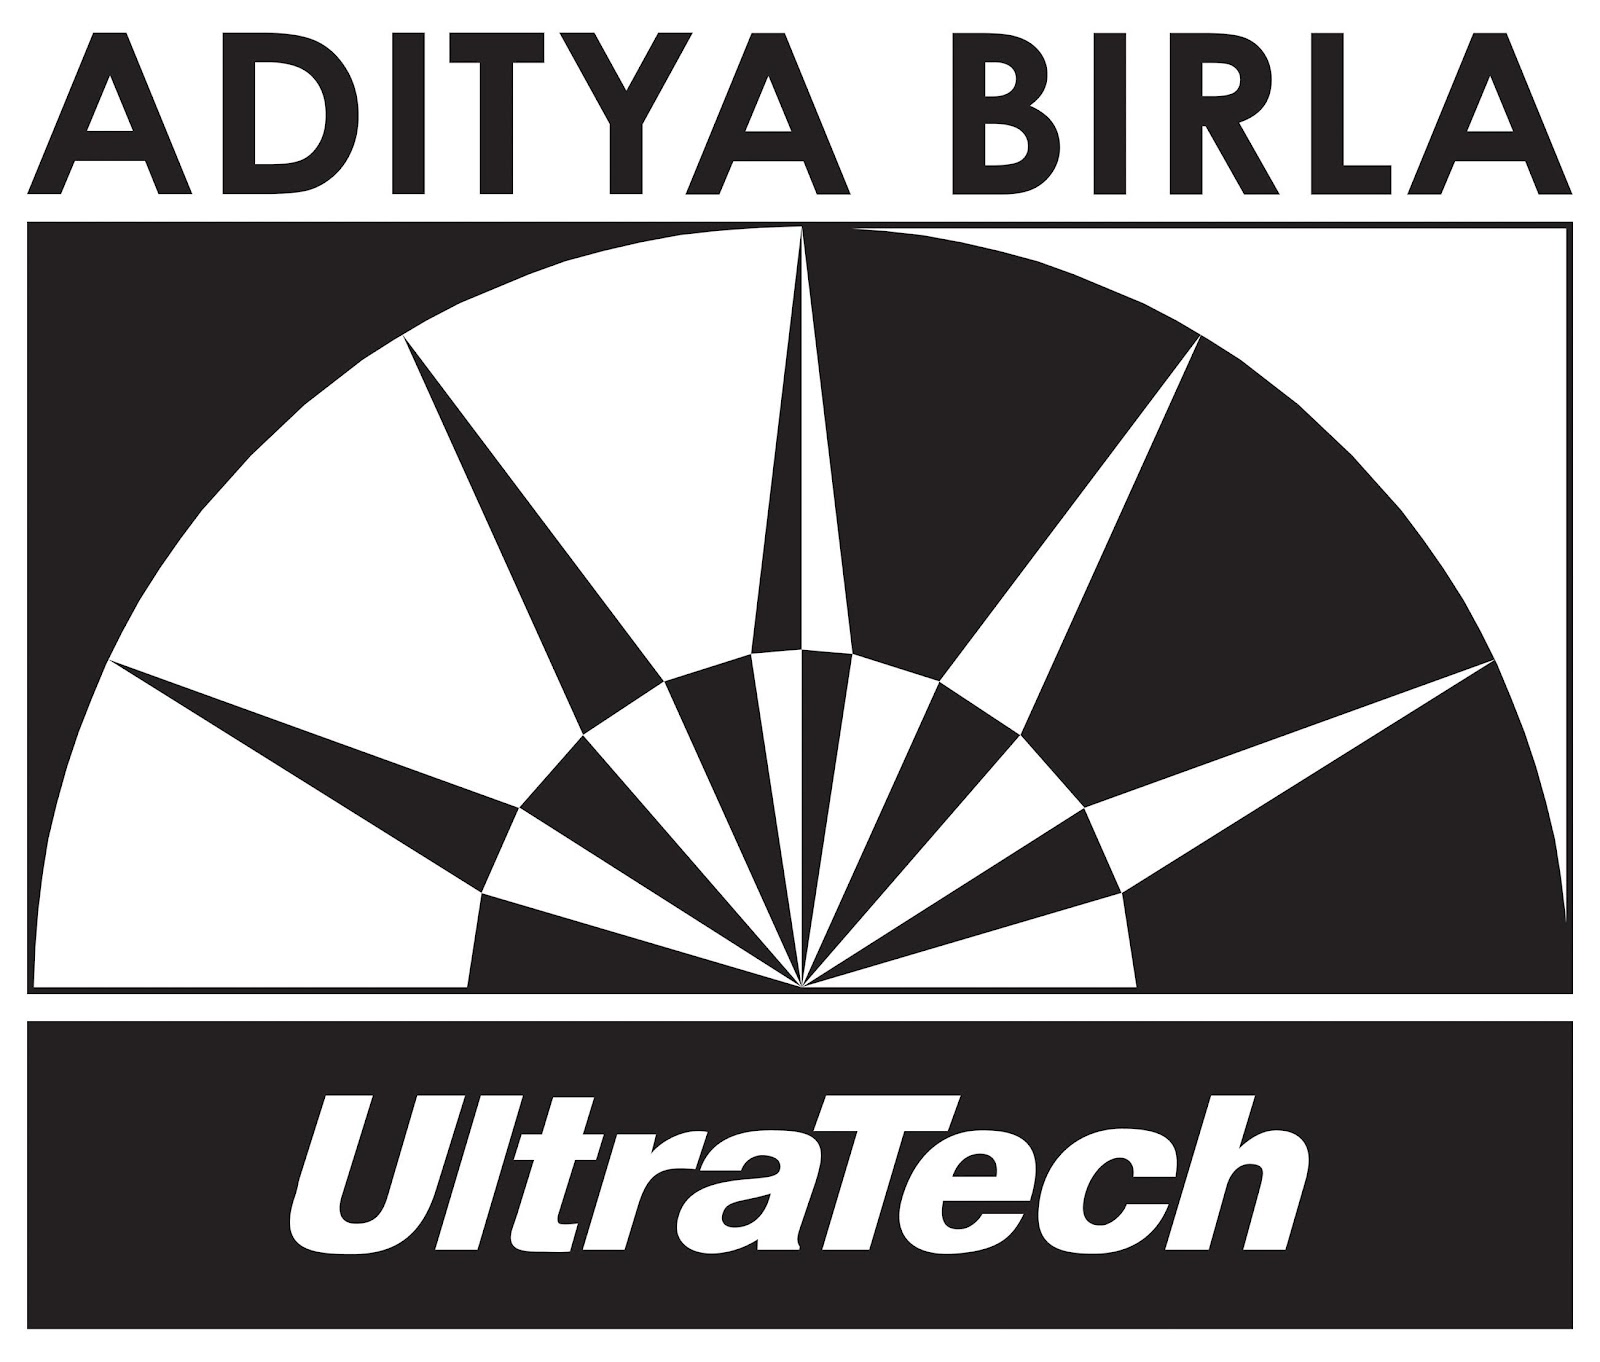 Ultratech Logo Animation - YouTube